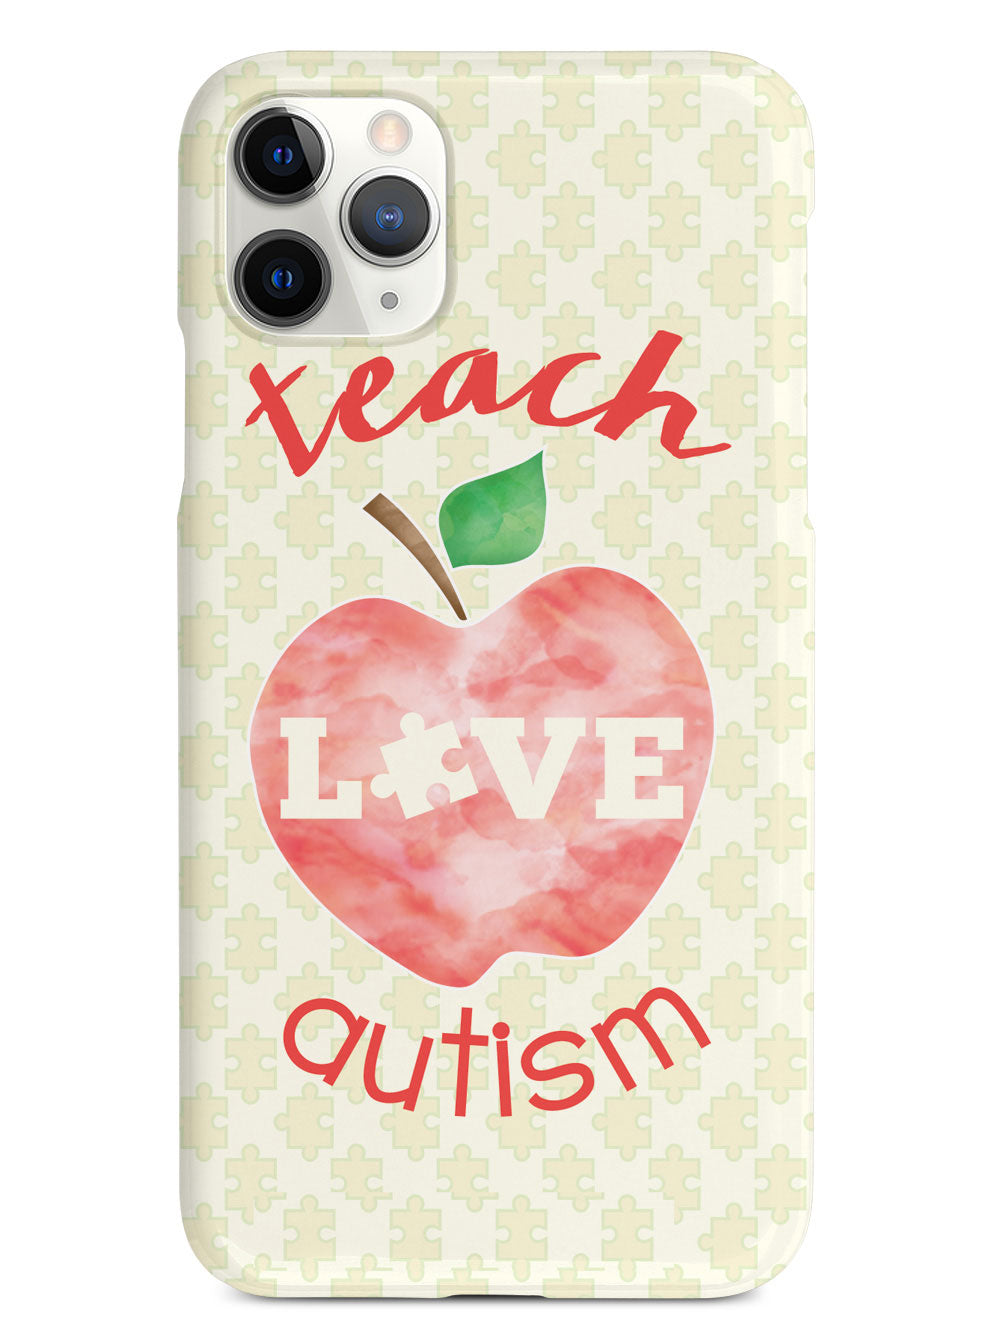 Teach Love Autism Case